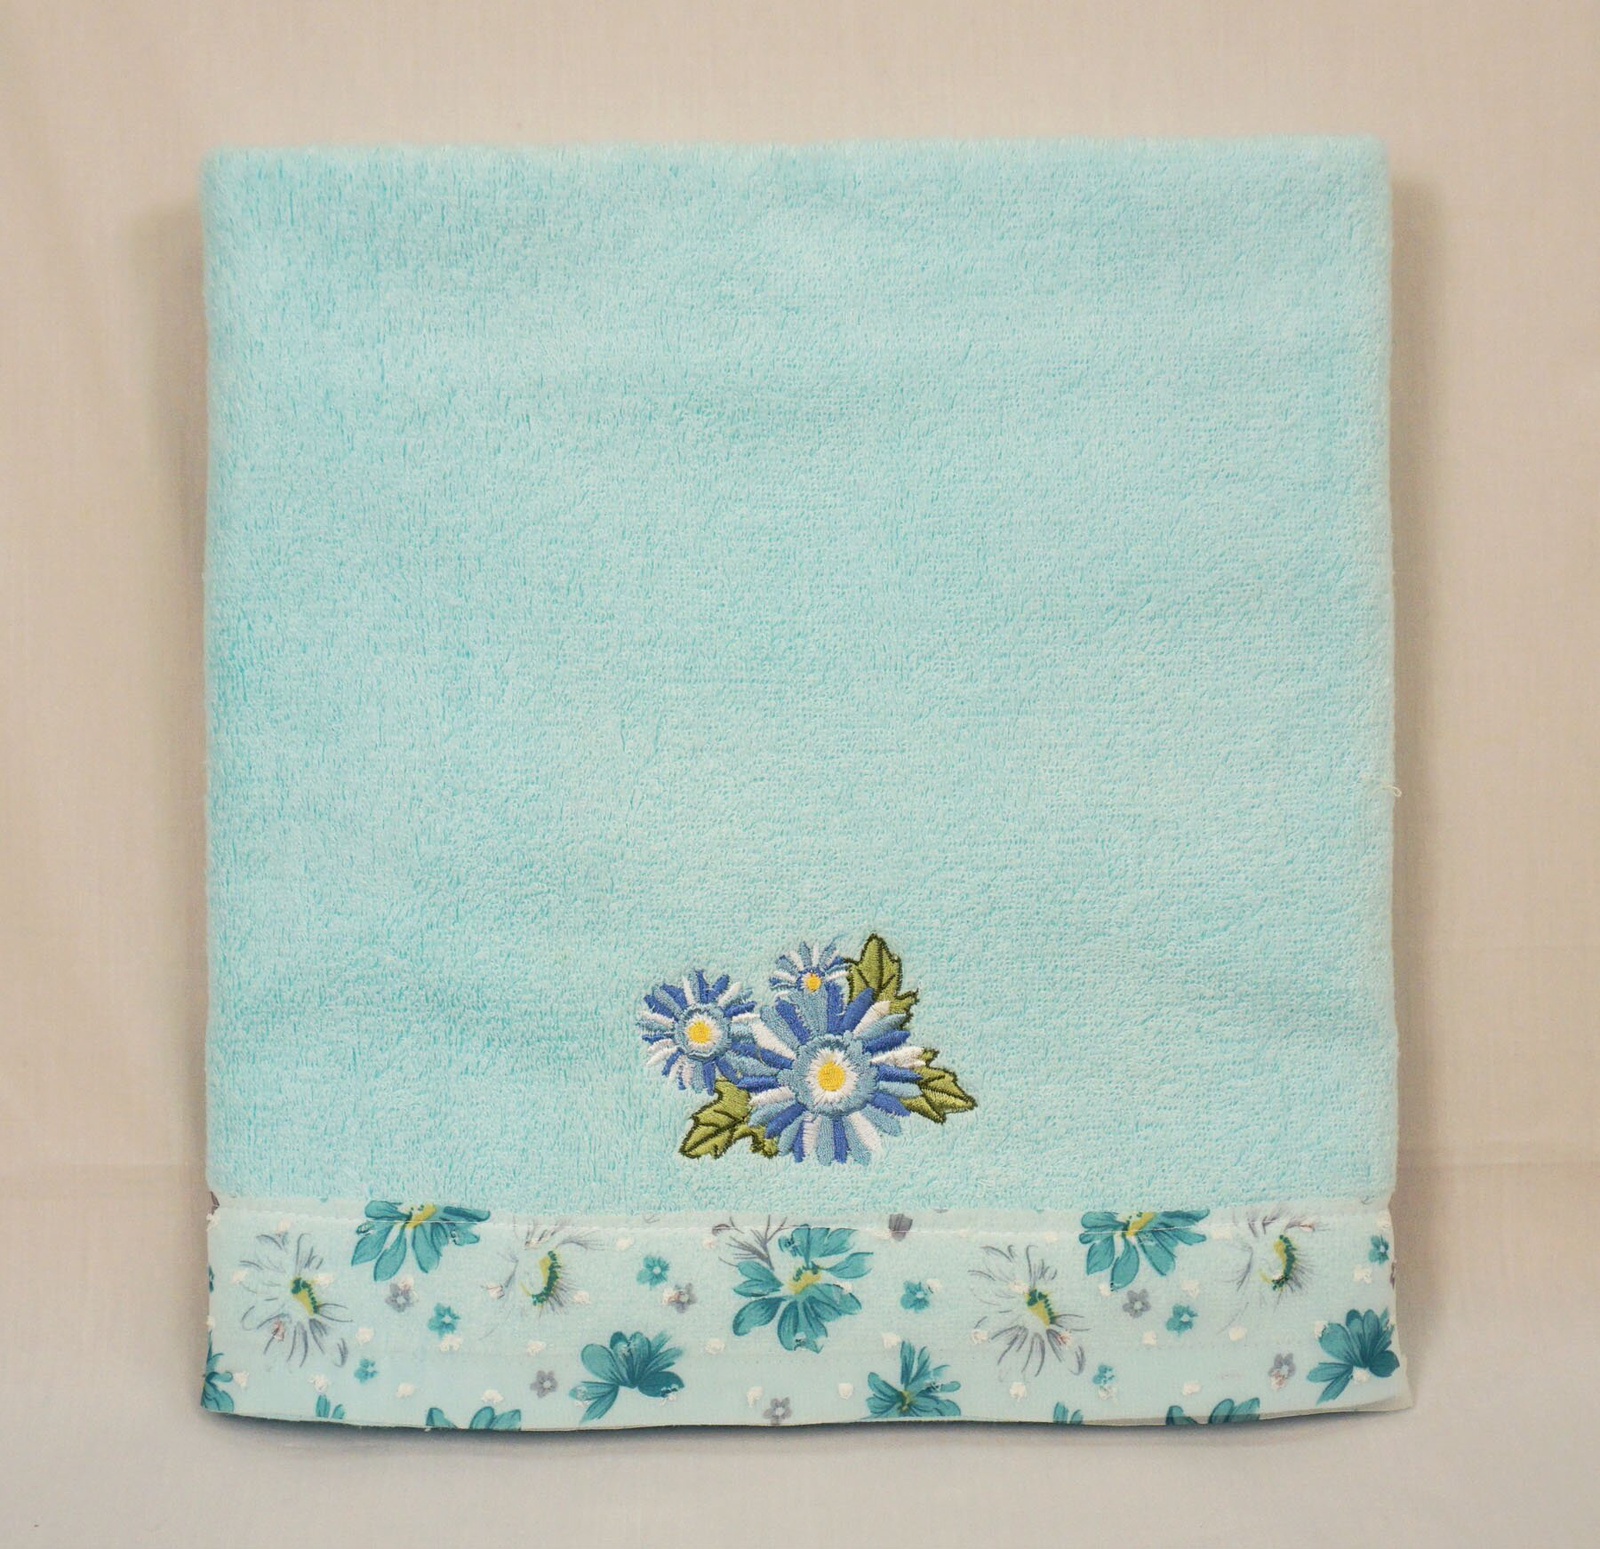 Полотенце банное Grand Stil Астра, размер 65*135, 14-153b, голубой